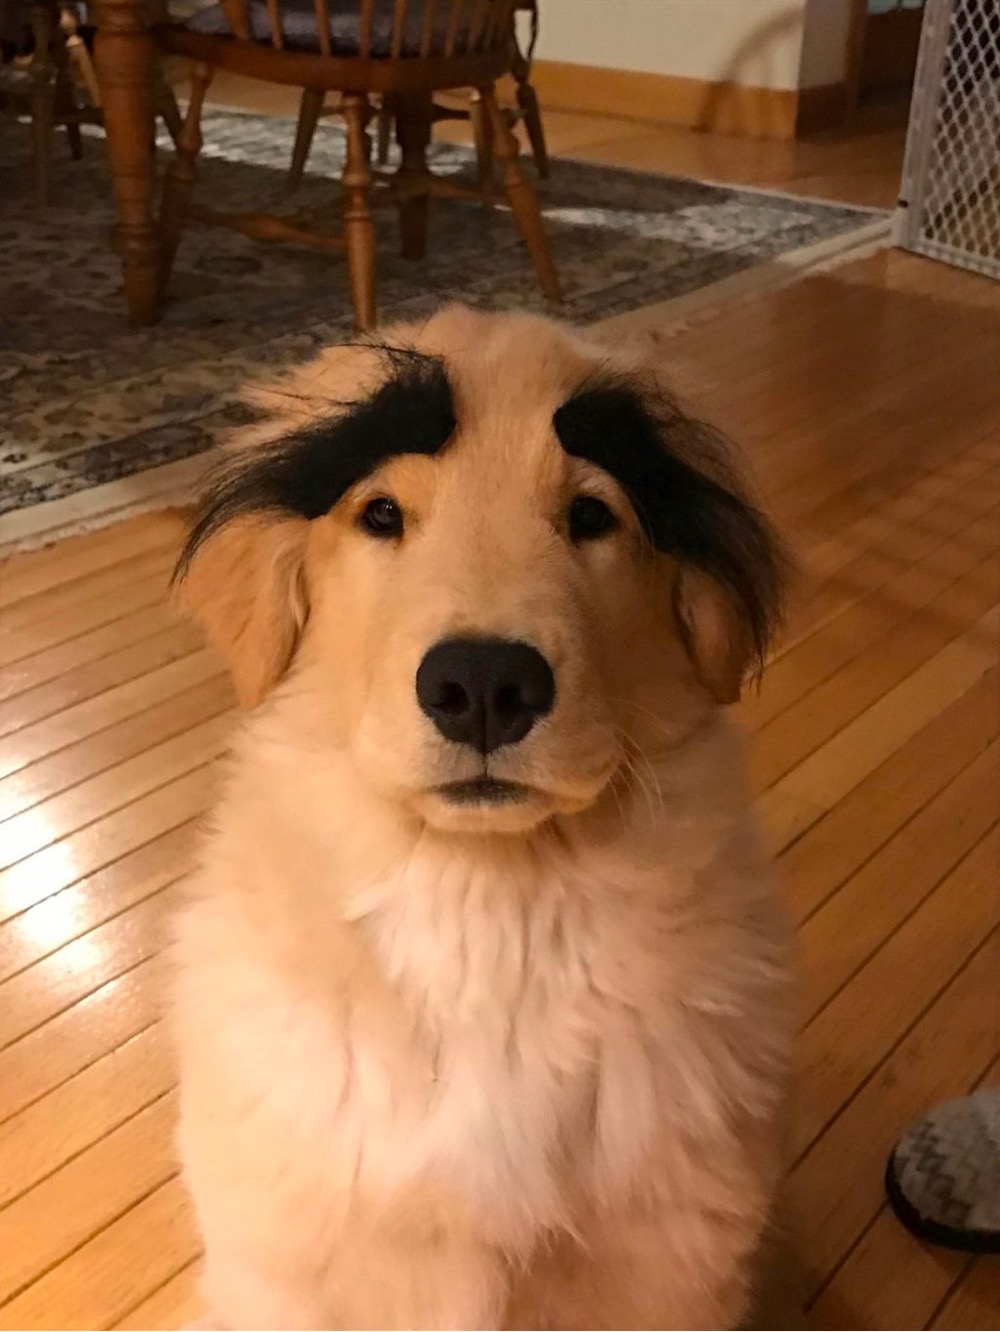 a dog that looks like Martin Scorsese